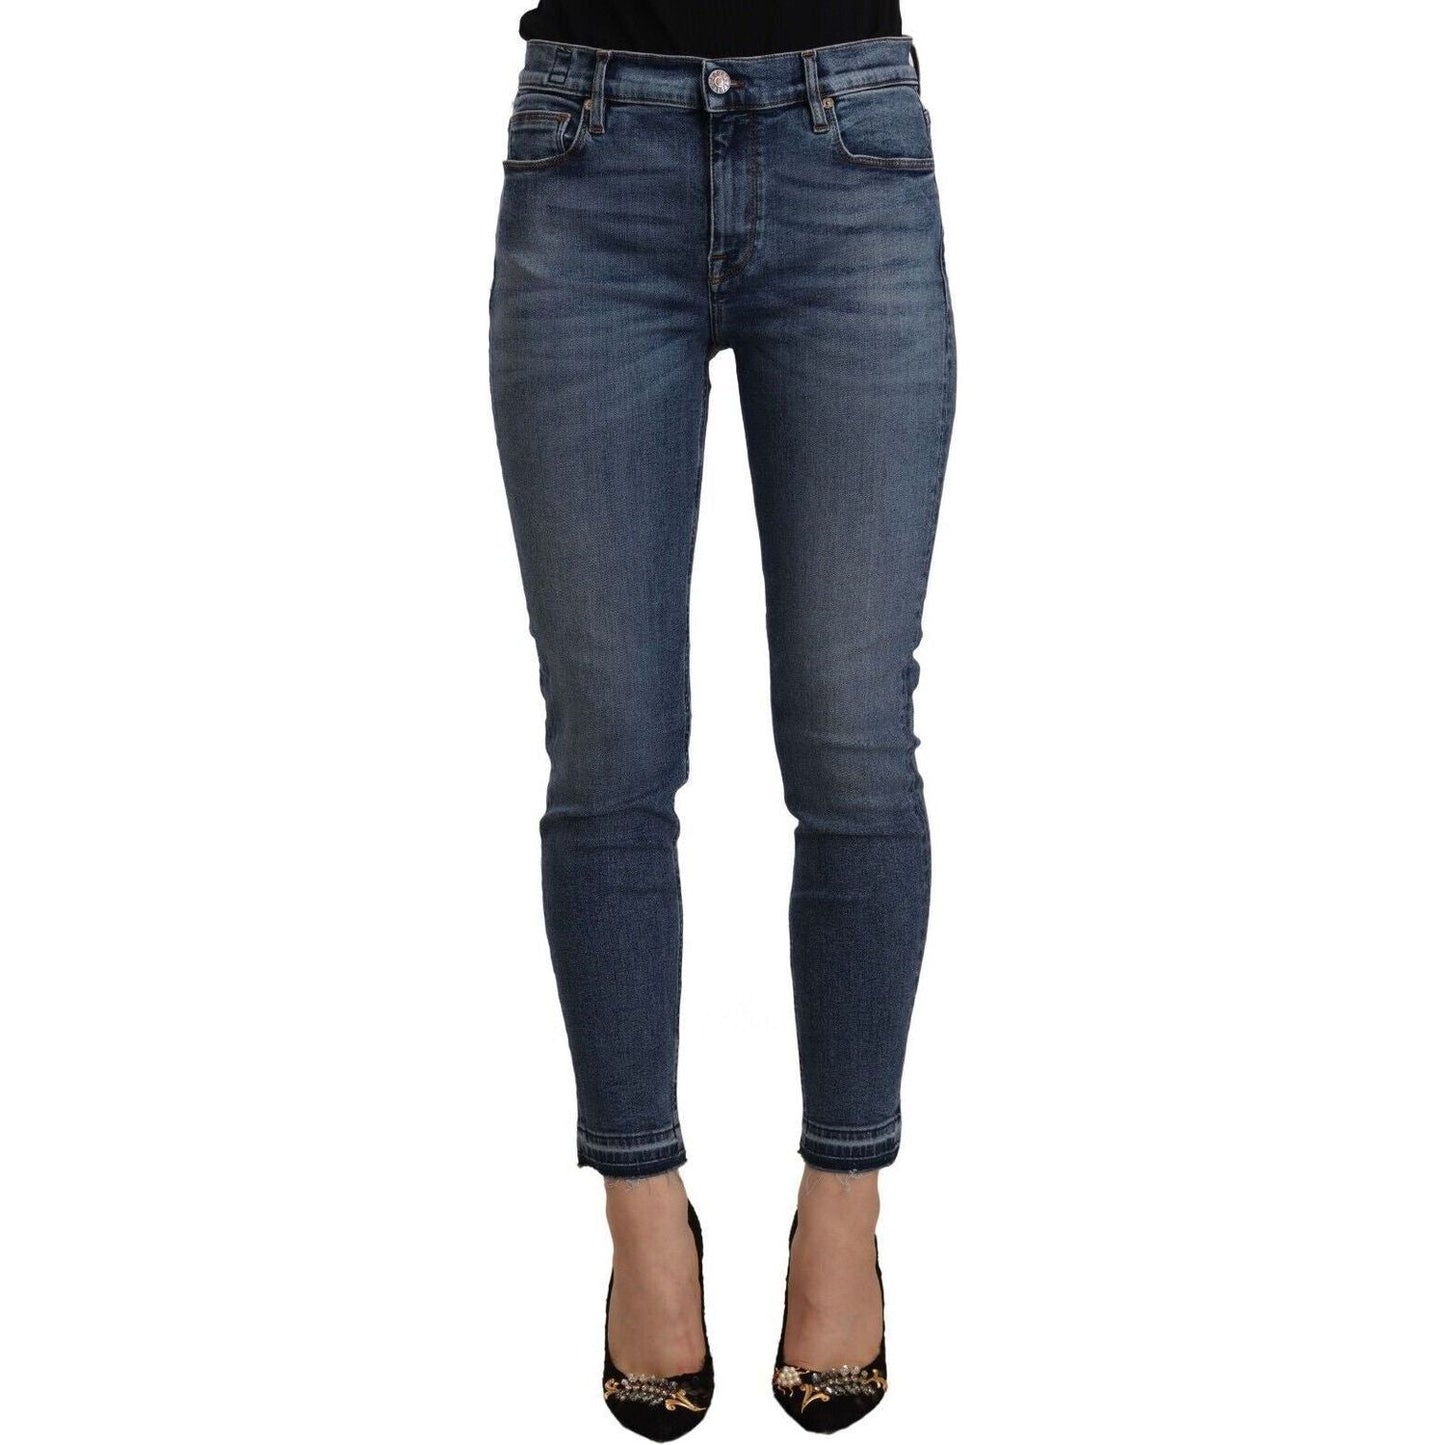 Don The Fuller Chic Slim Fit Blue Washed Jeans blue-mid-waist-cotton-denim-slim-fit-cropped-jeans s-l1600-9-4-1e7d027d-fa7.jpg